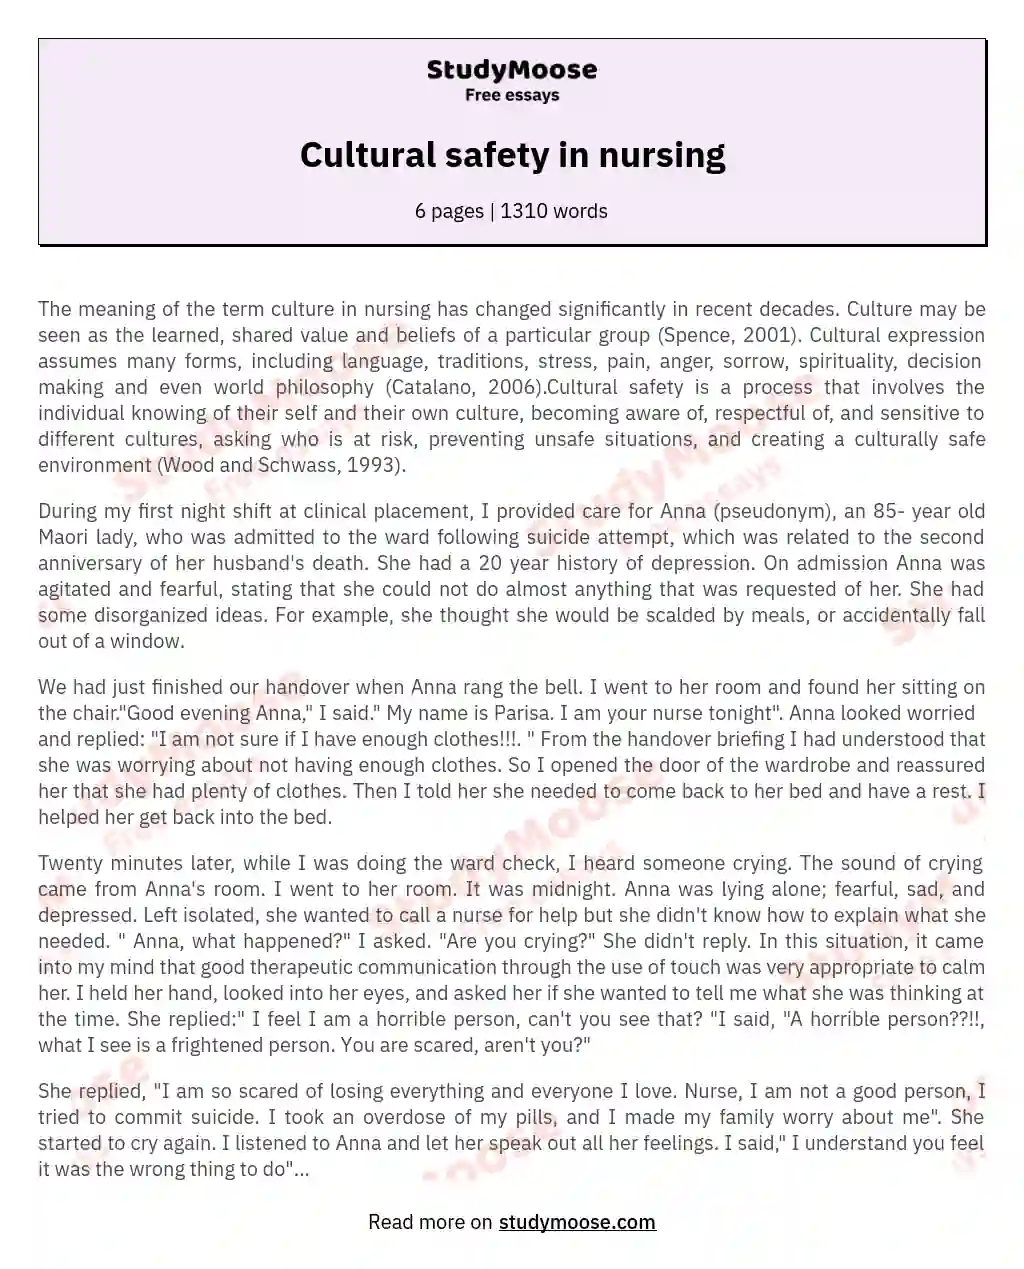 Cultural safety in nursing essay